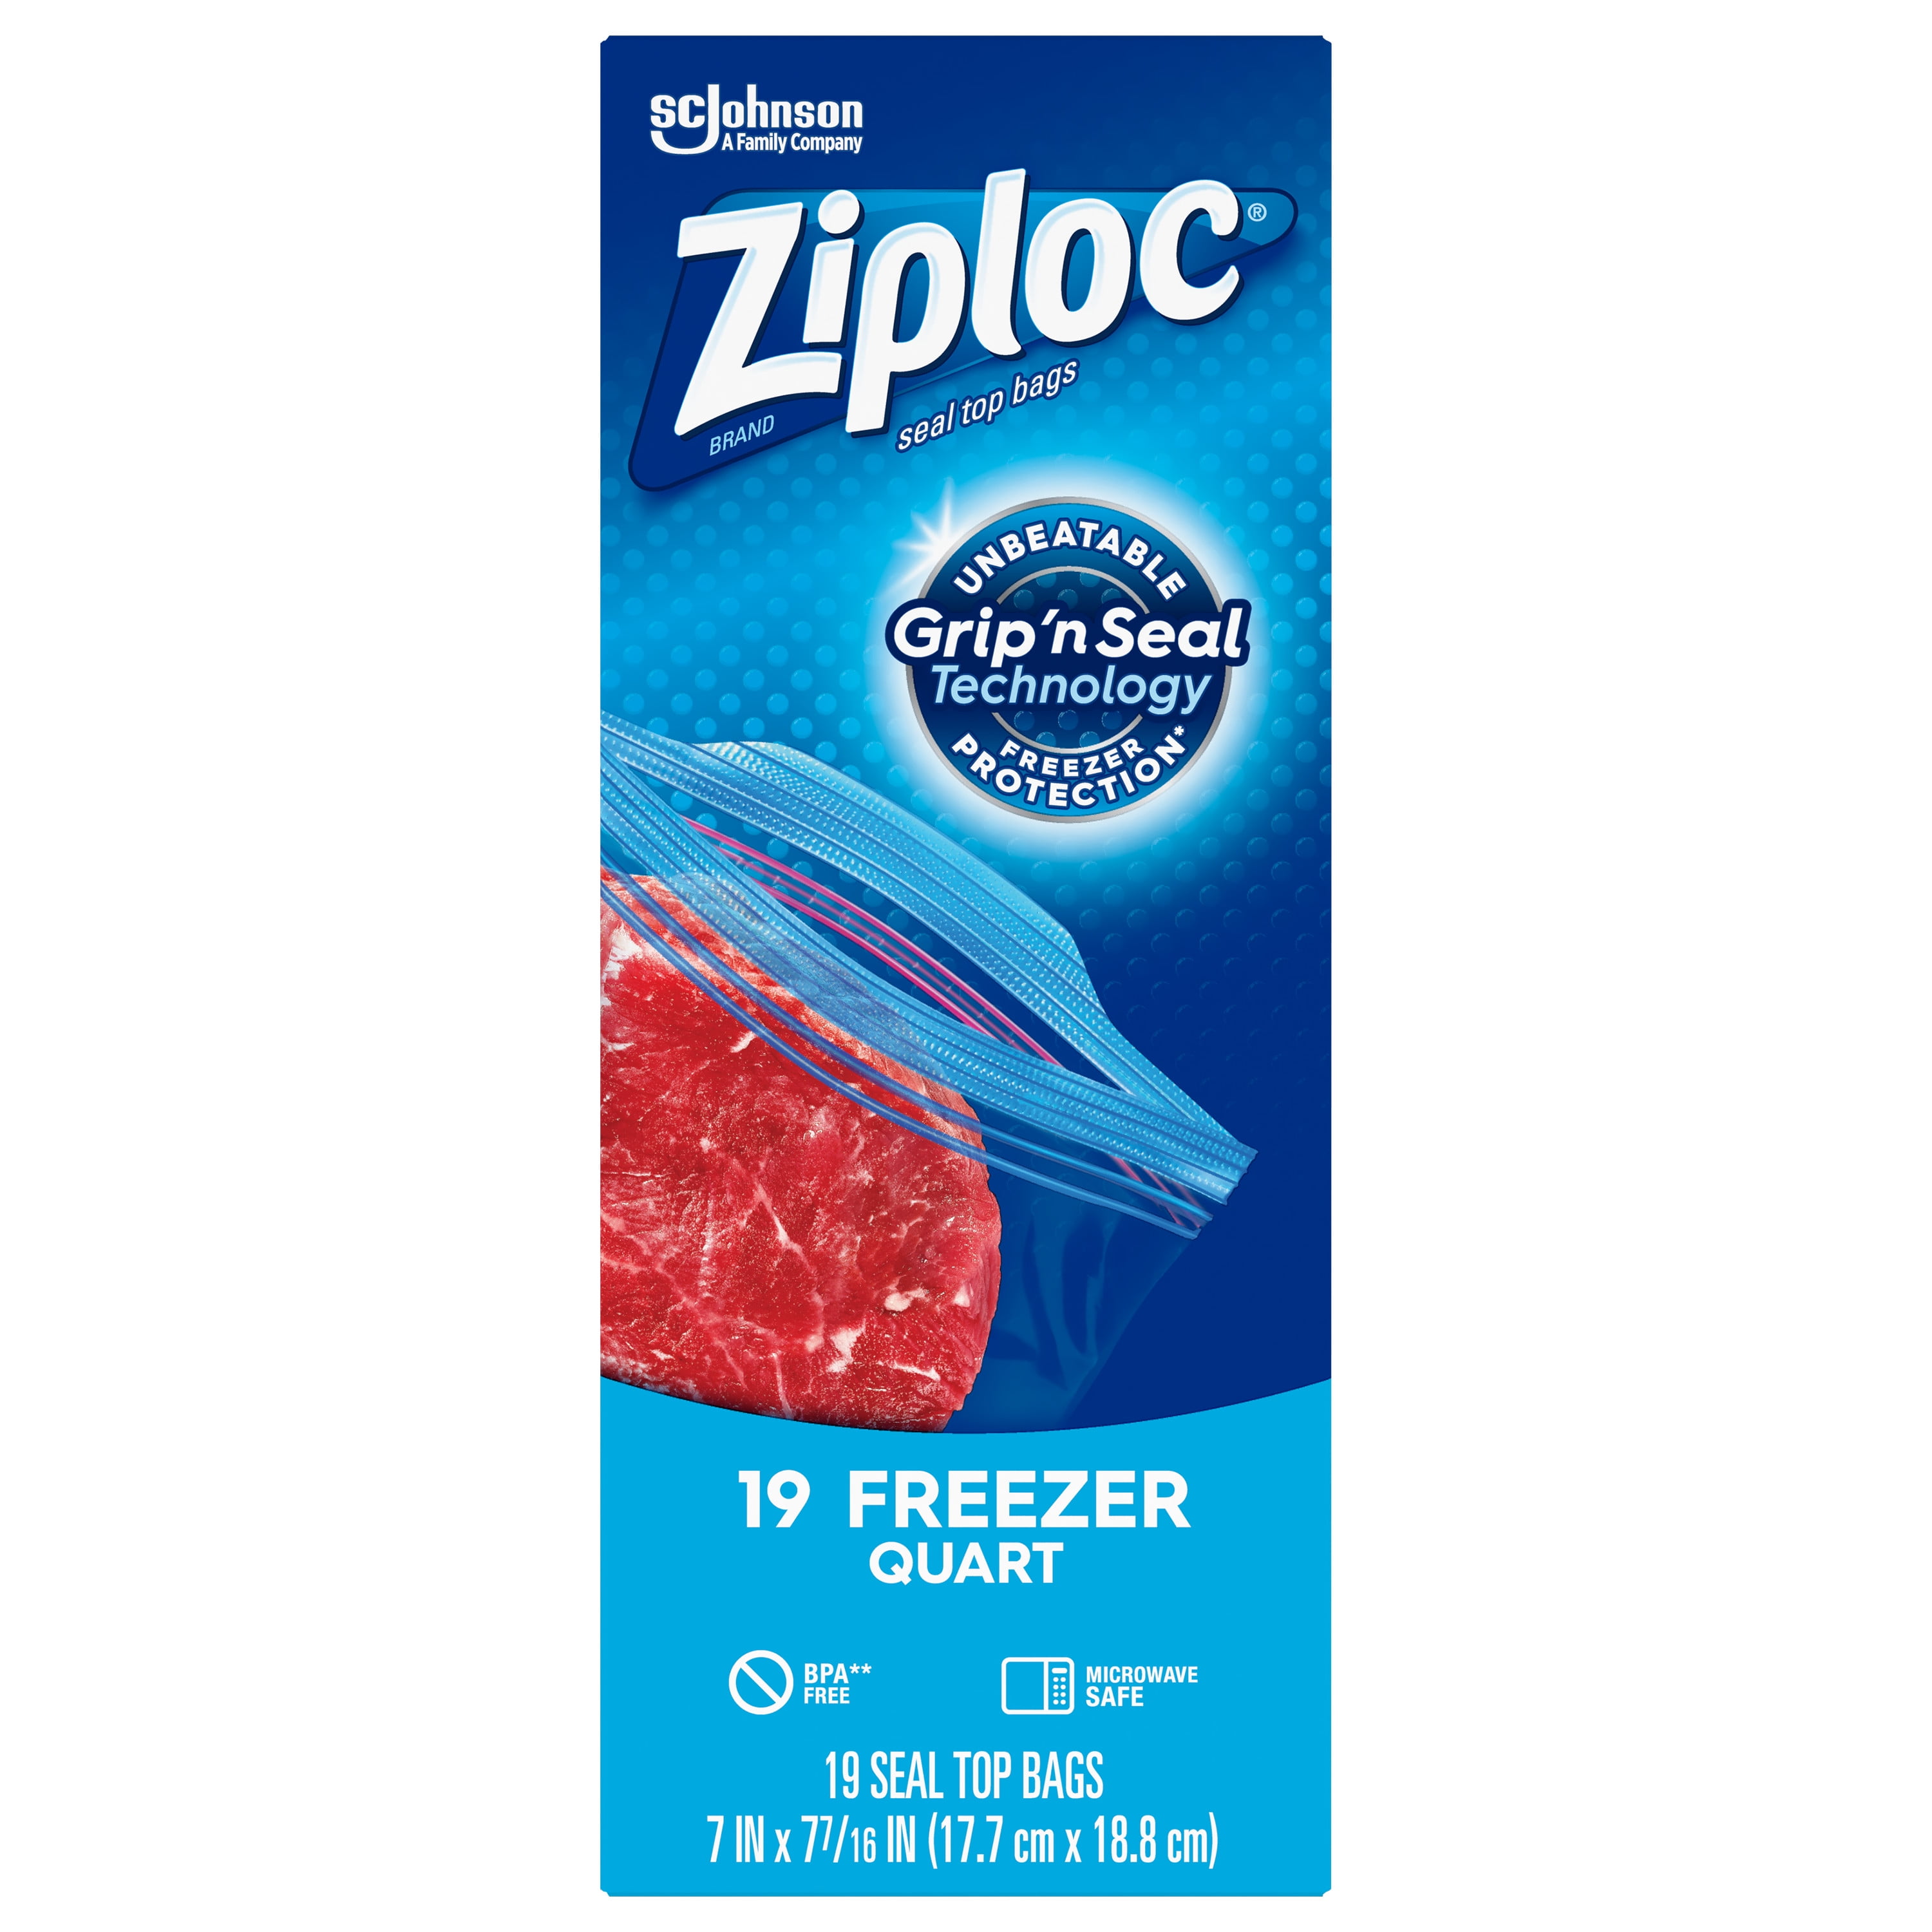 Ziploc Large Food Storage Freezer Bags, Grip 'n Seal Technology